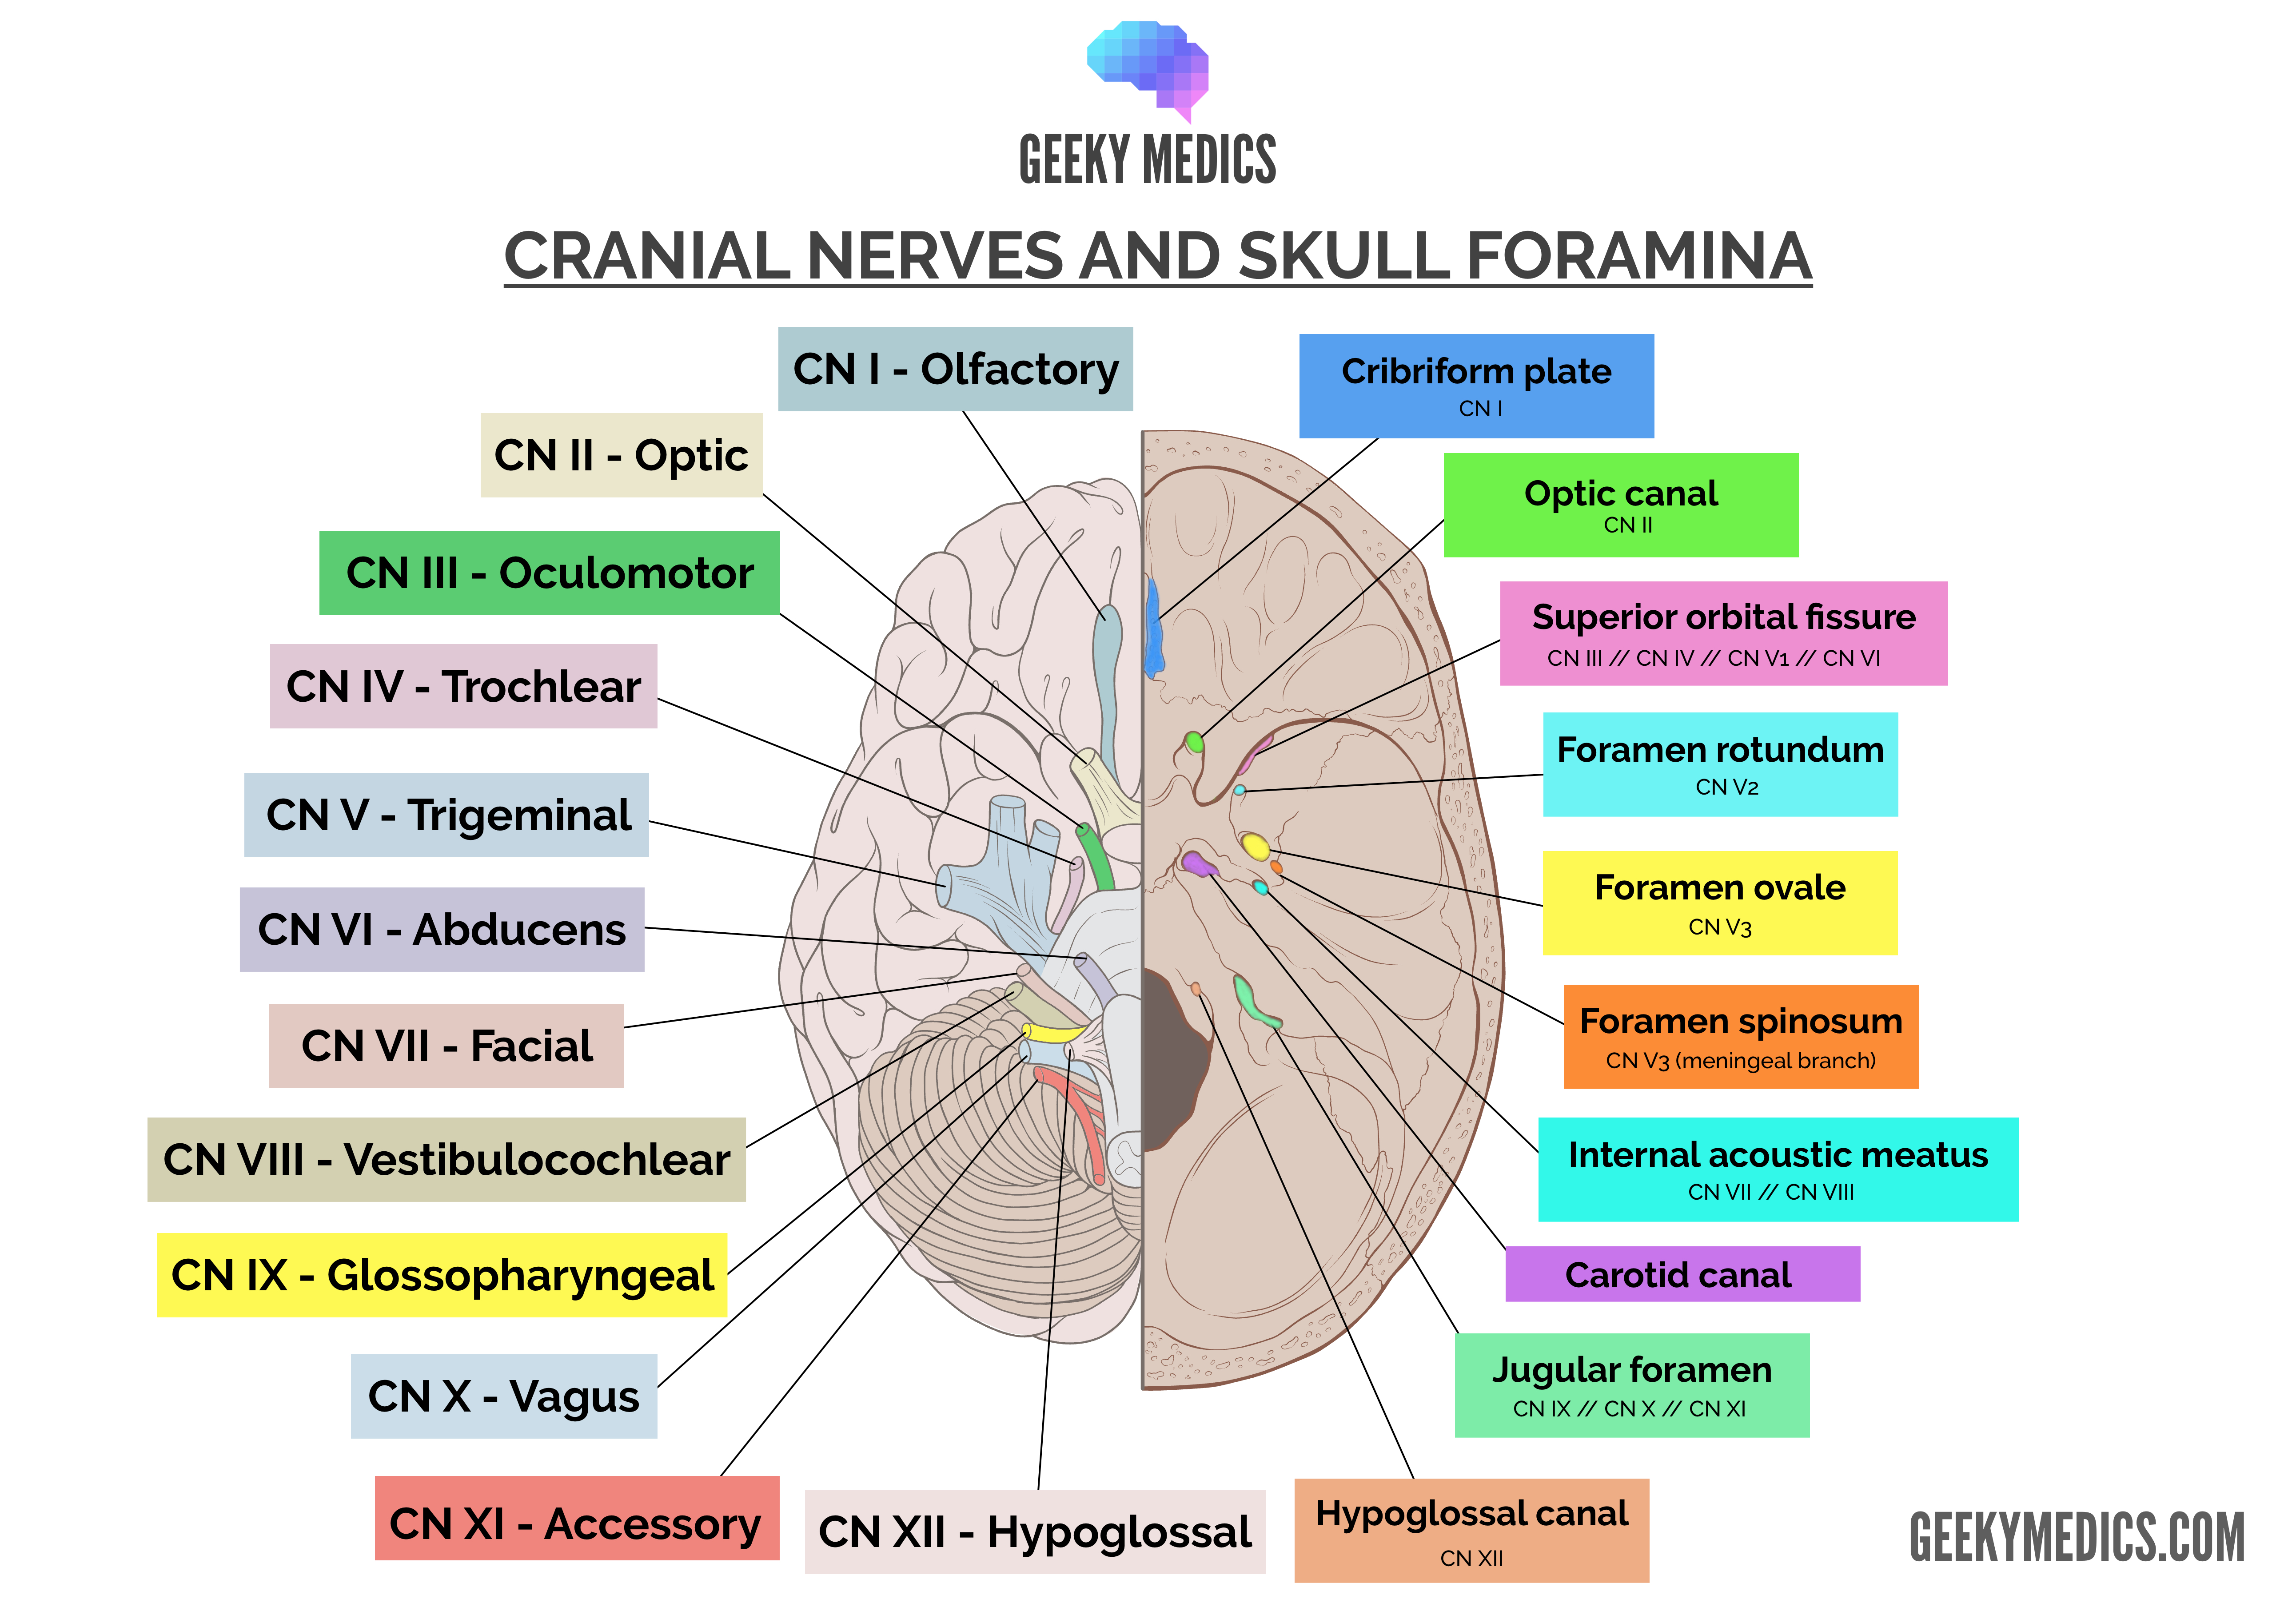 Cranial Nerve Reflexes Chart